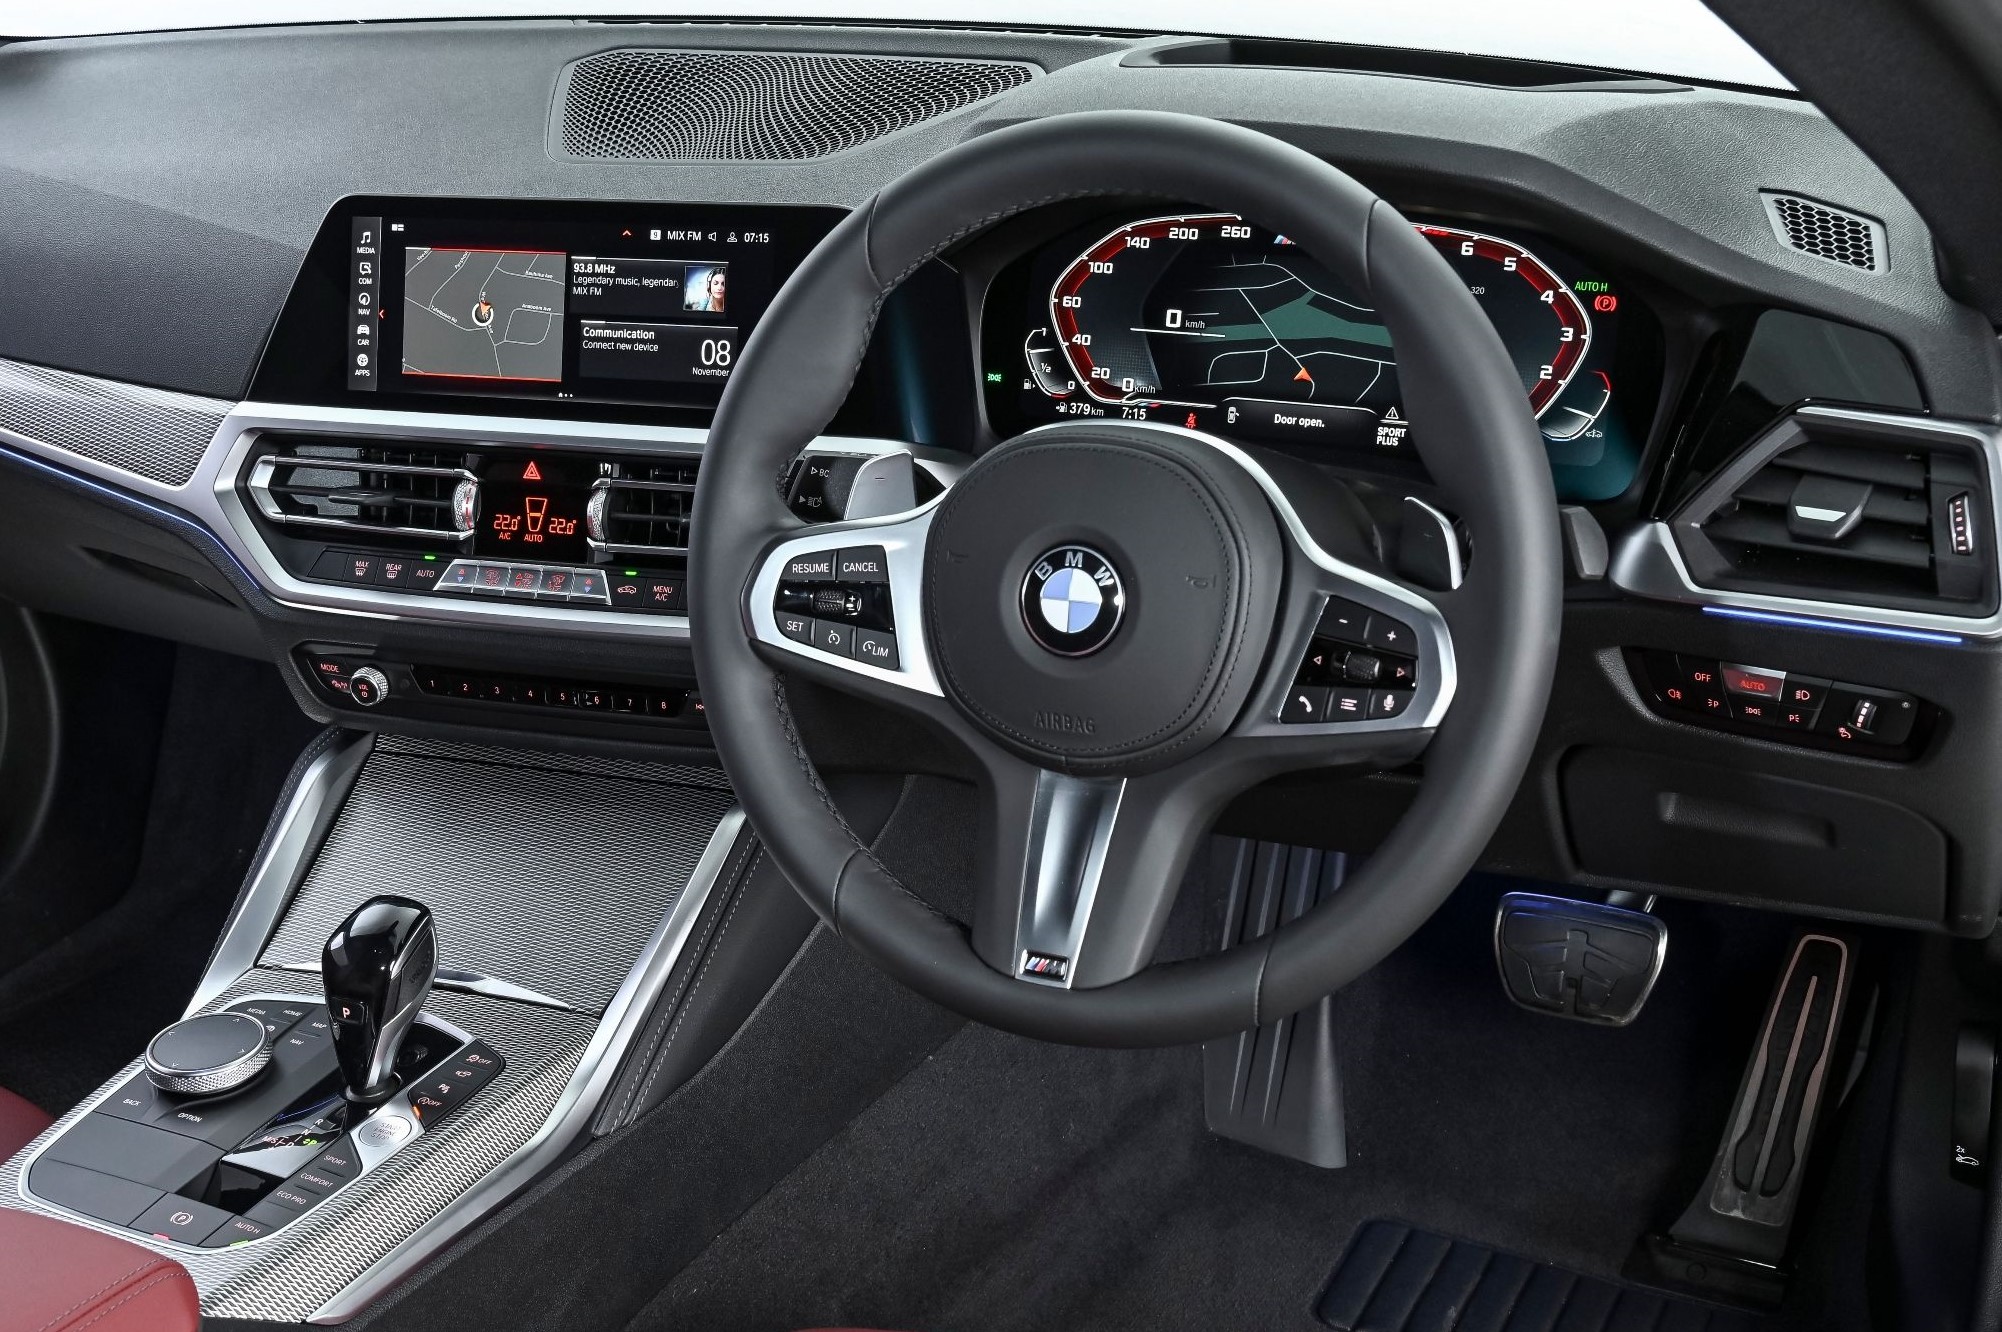 BMW 4 Series interior